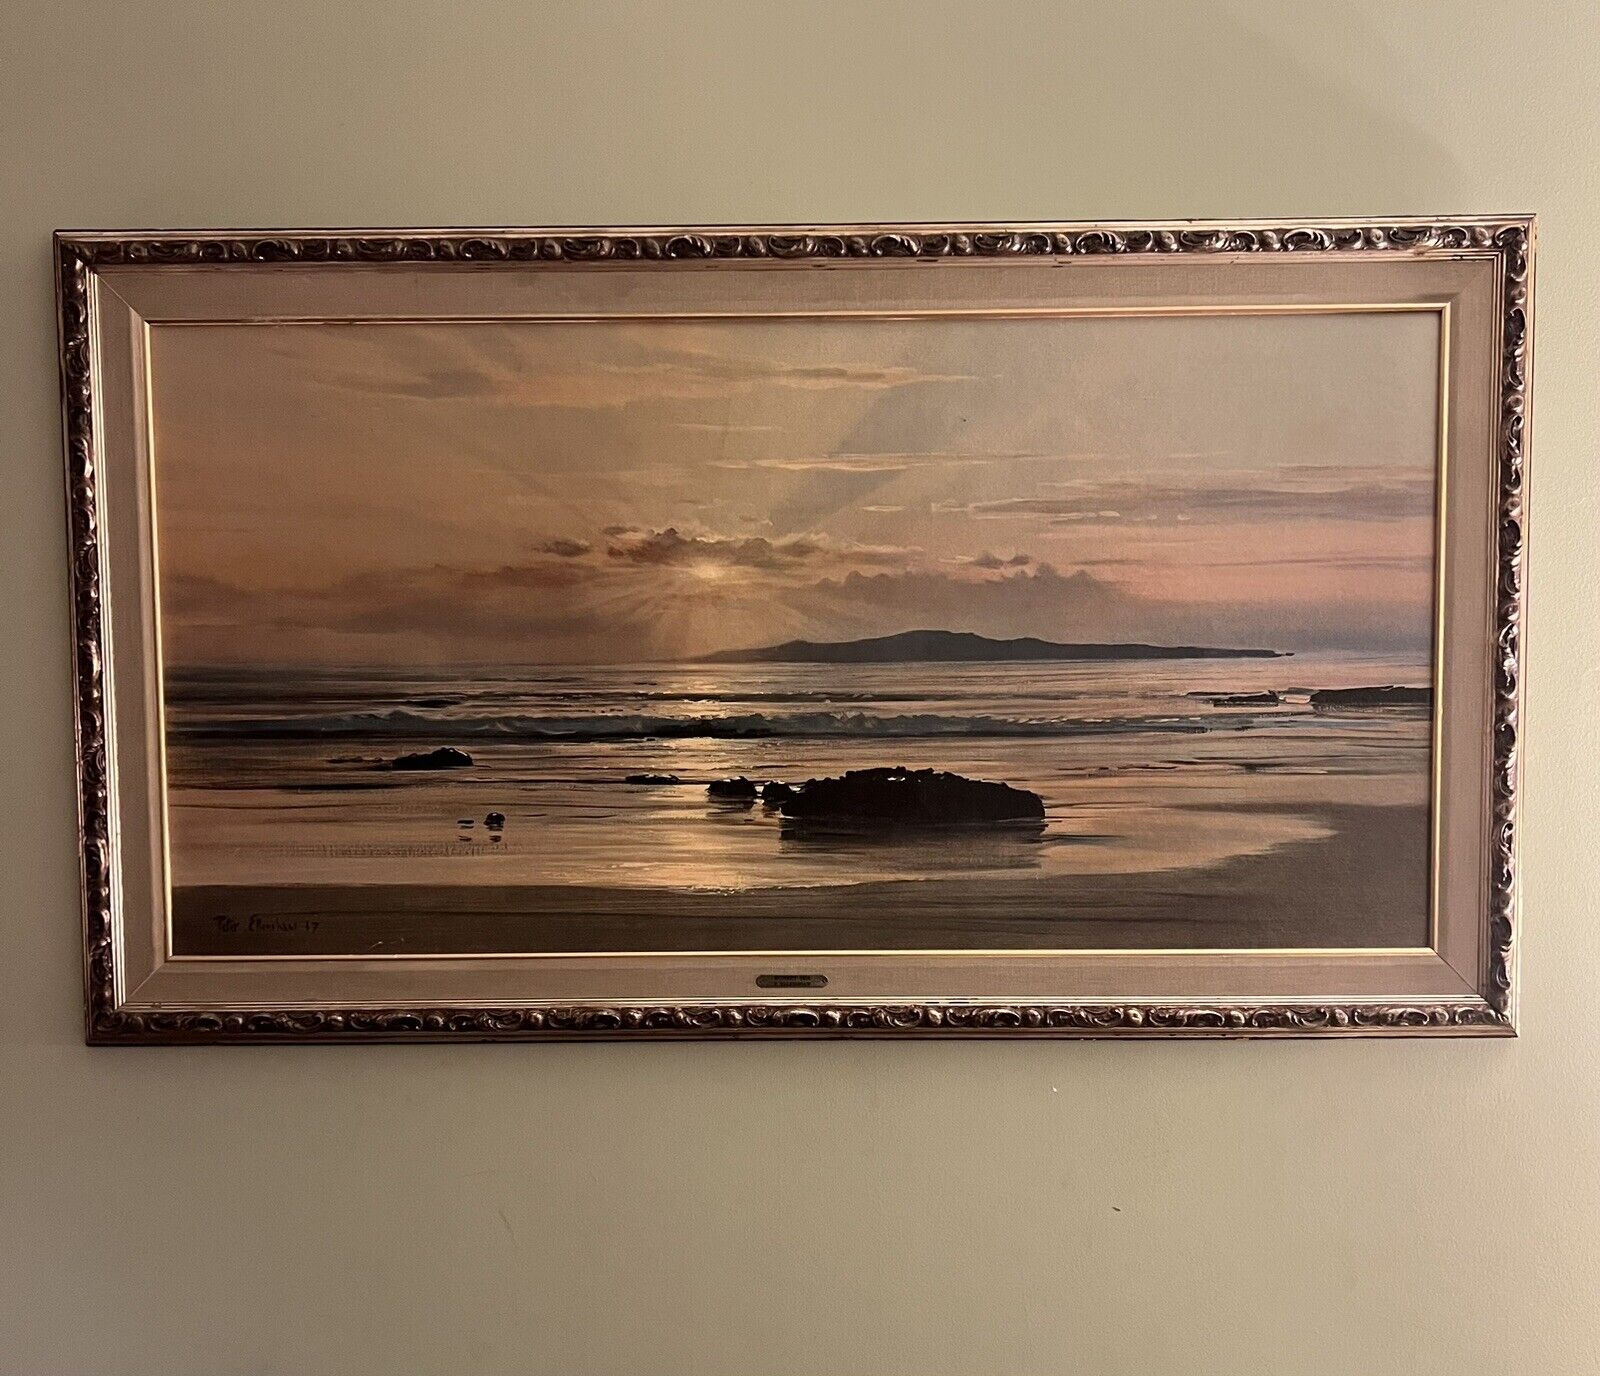 VTG Turner Wall Accessories Peter P. Ellenshaw Print Sunset Sea Framed  54x30.5